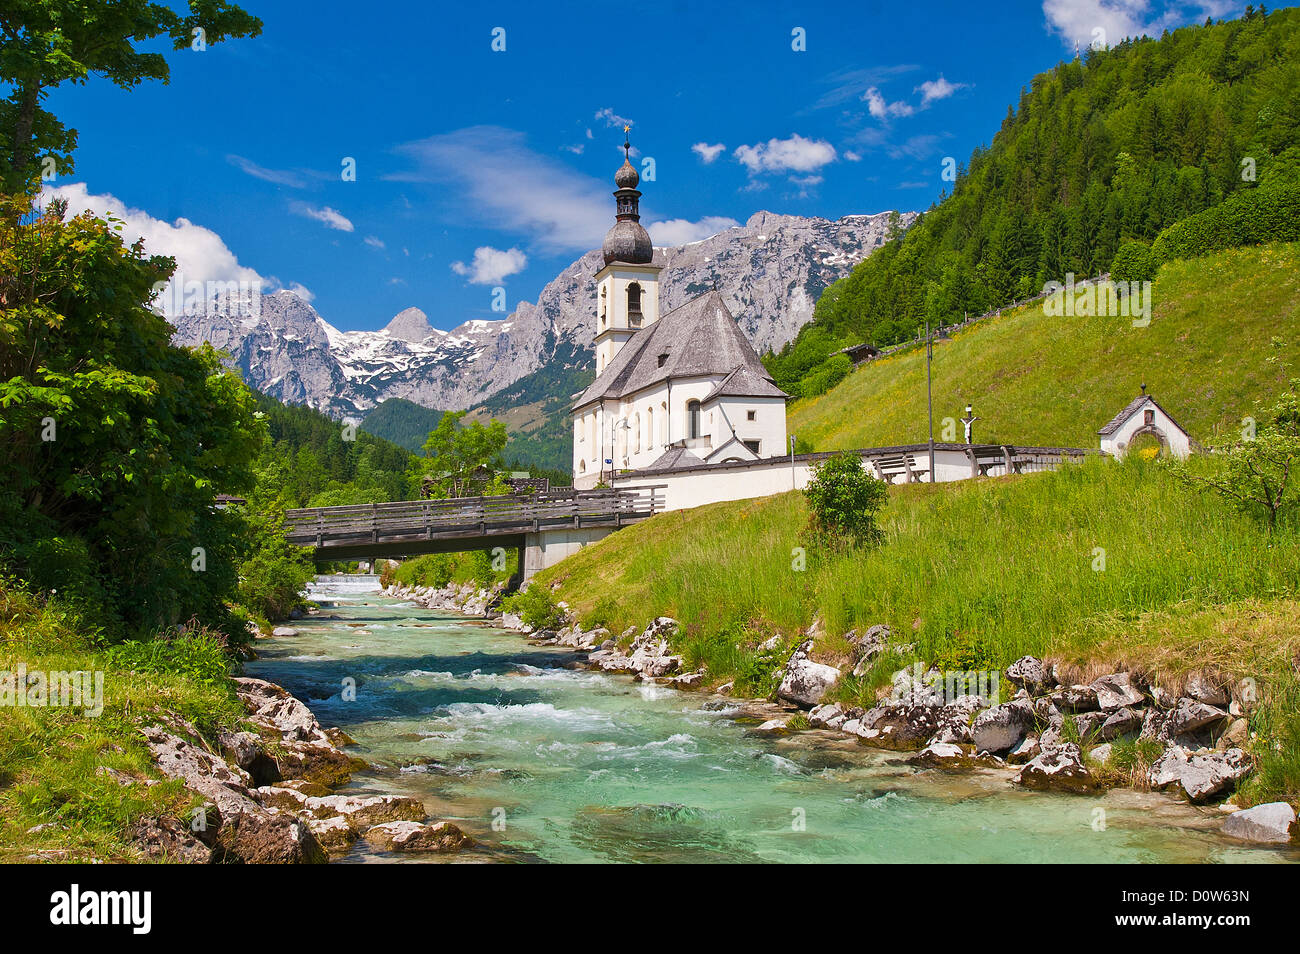 Europa, Oberbayern, Bayern, Berchtesgadener, Berchtesgaden, Himmel, blauer Himmel, Alpen, Berge, Felsen, Panorama, Stein, Steinen Stockfoto